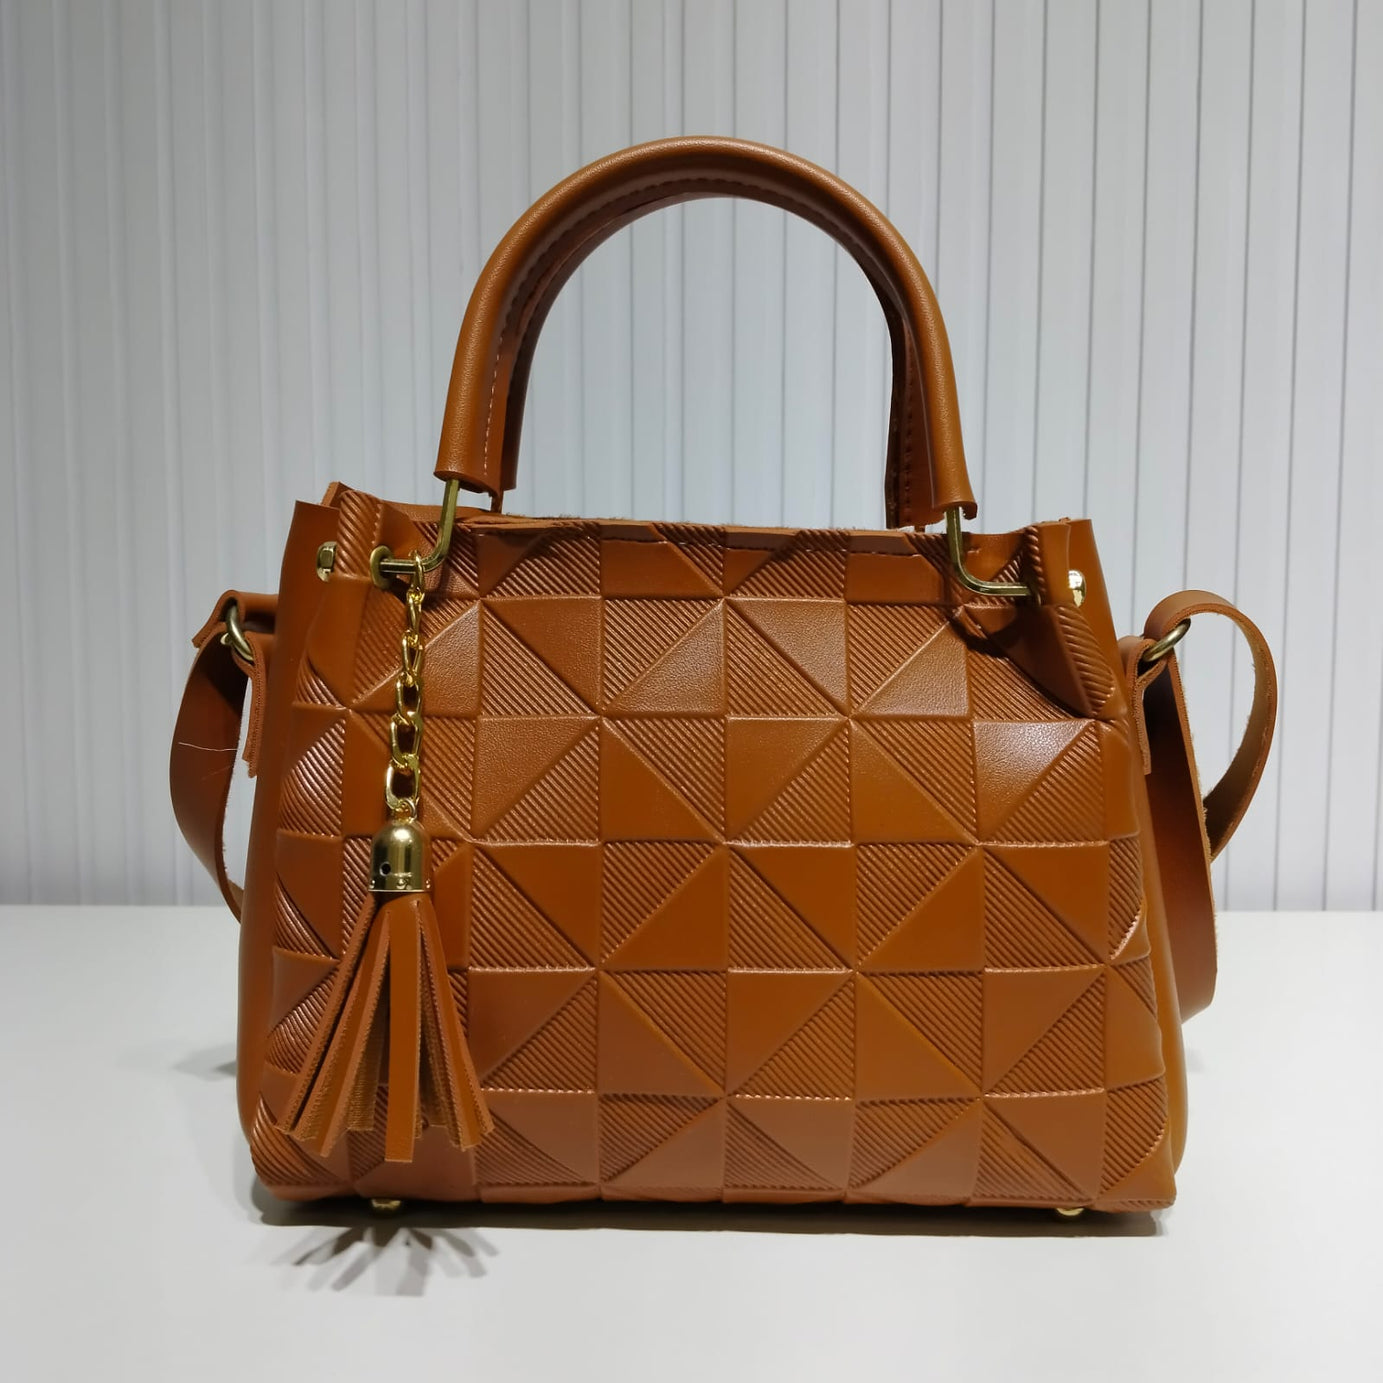 Classic & Chic: The Brown Handbag You Need High Quality Handbag shoulder bag cross body bag